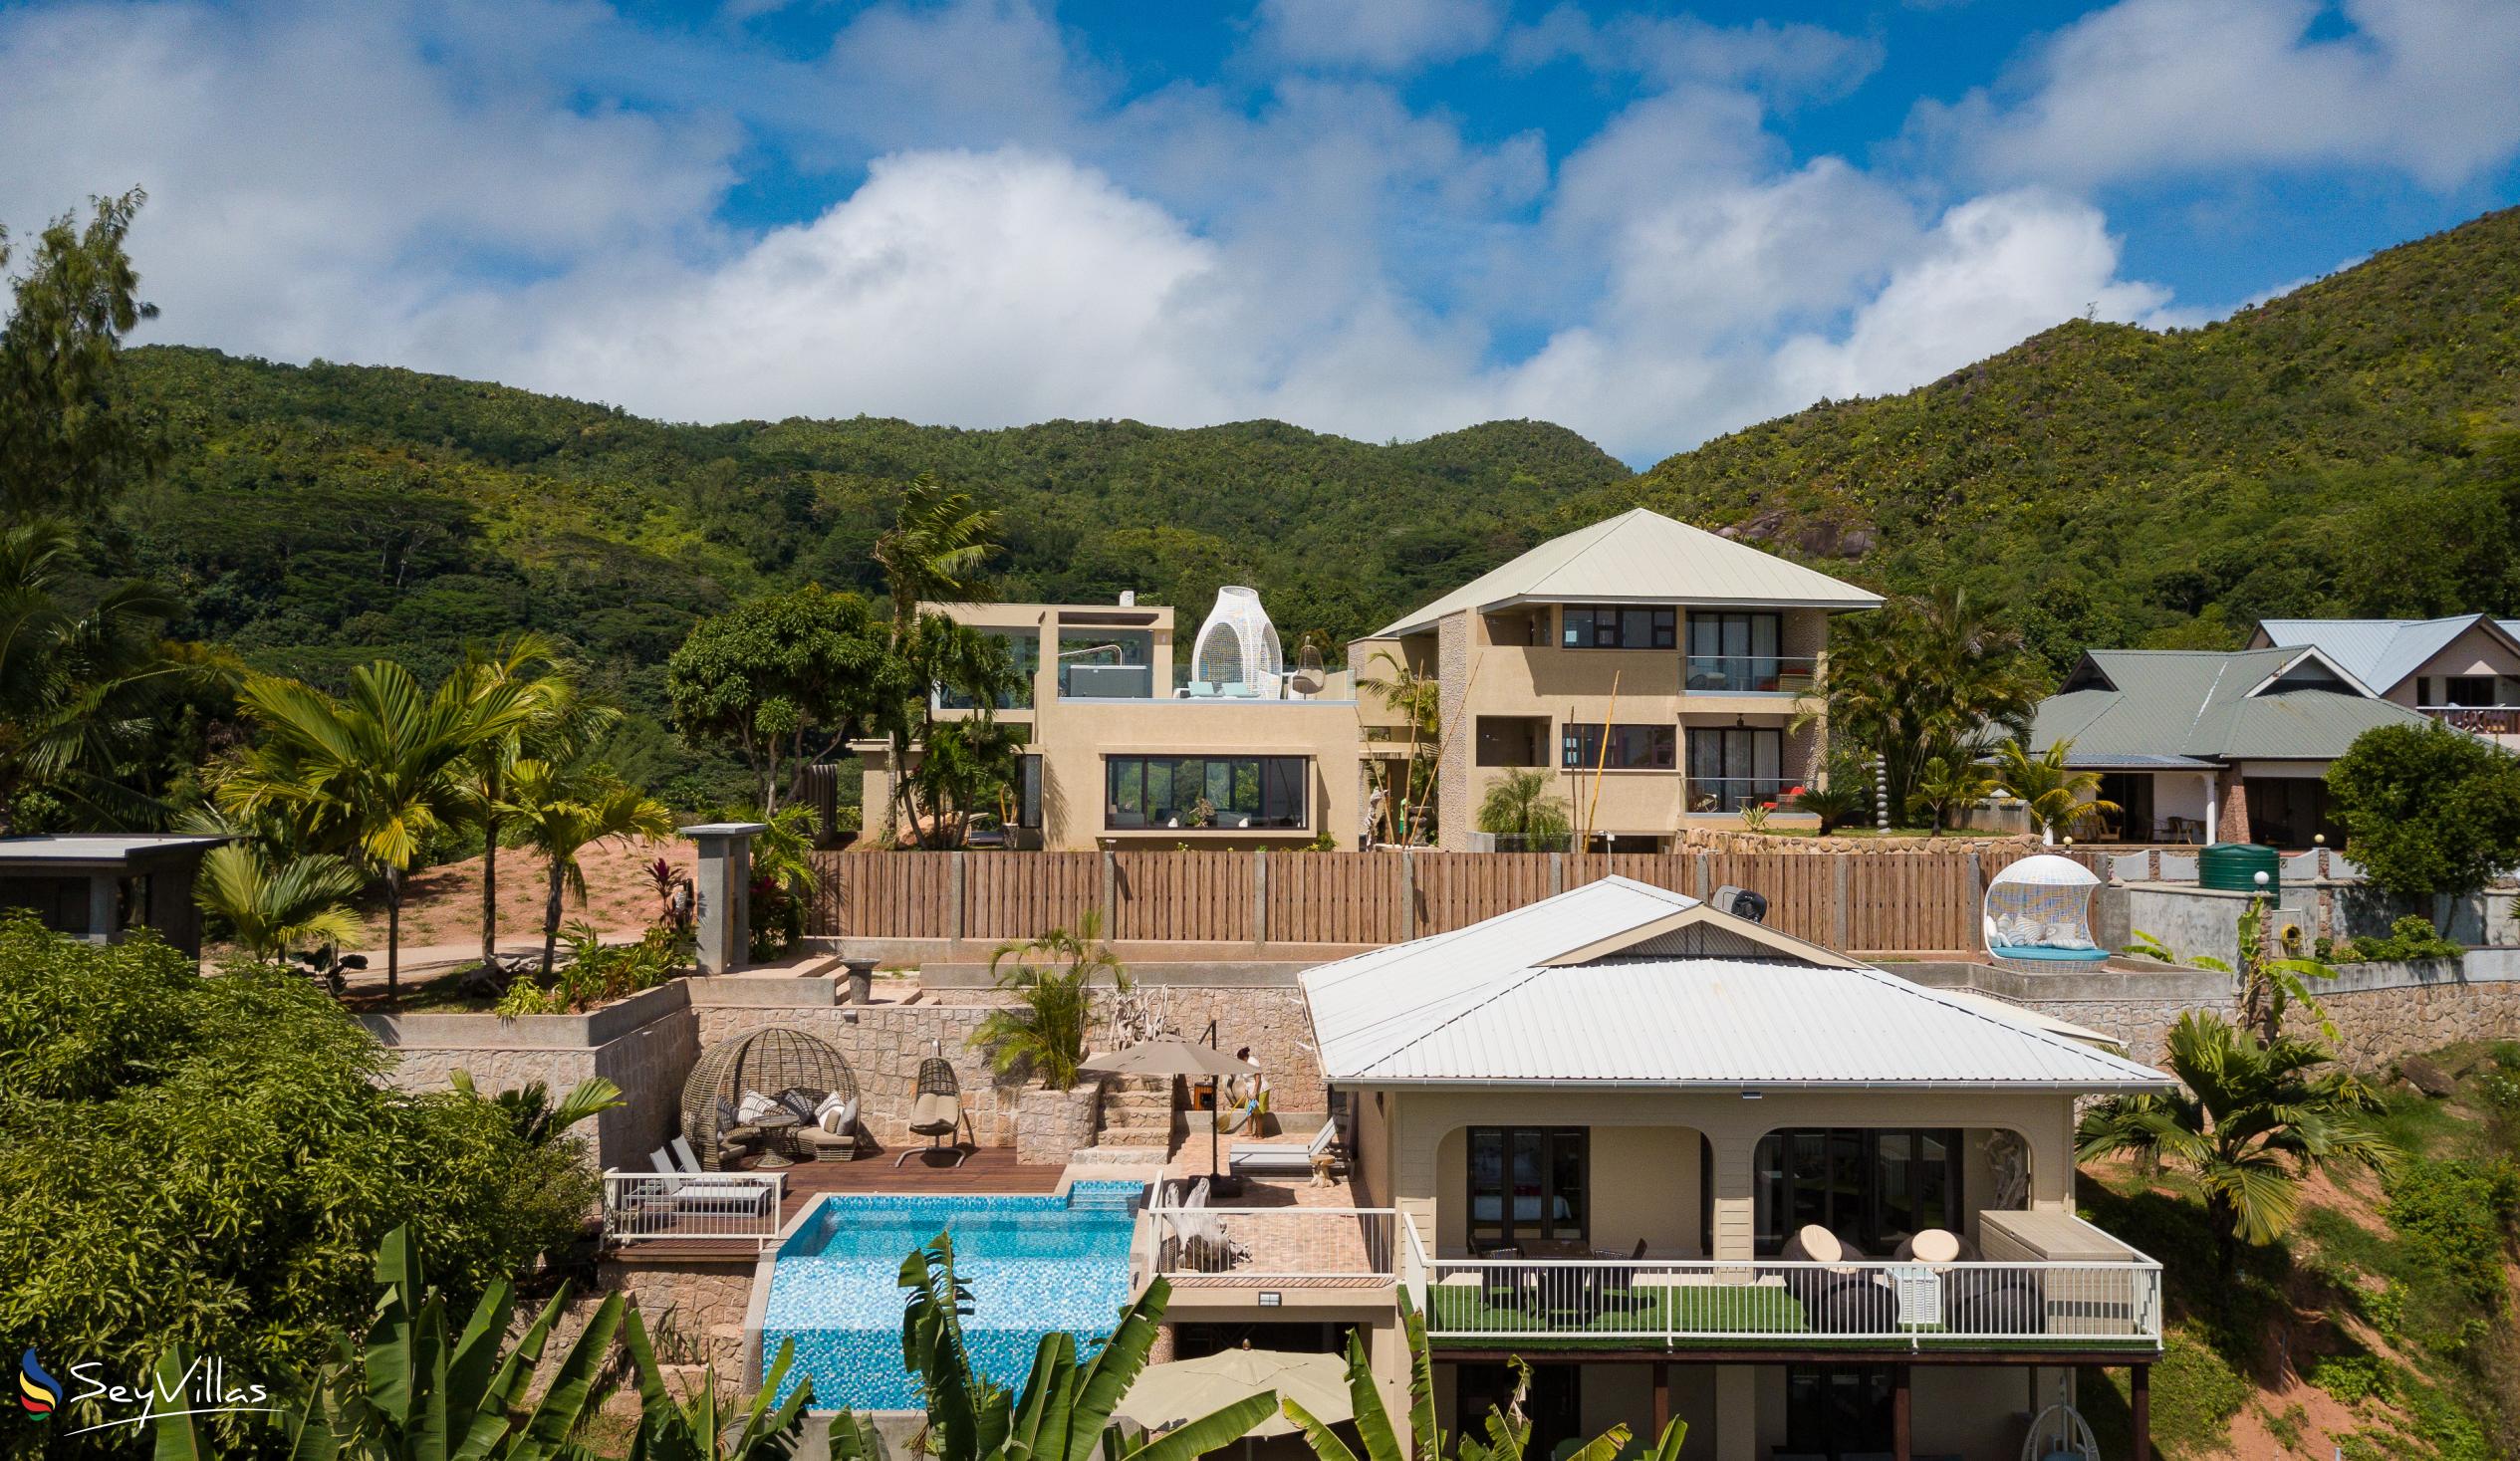 Foto 6: Le Duc de Praslin Hillside Villas - Aussenbereich - Praslin (Seychellen)